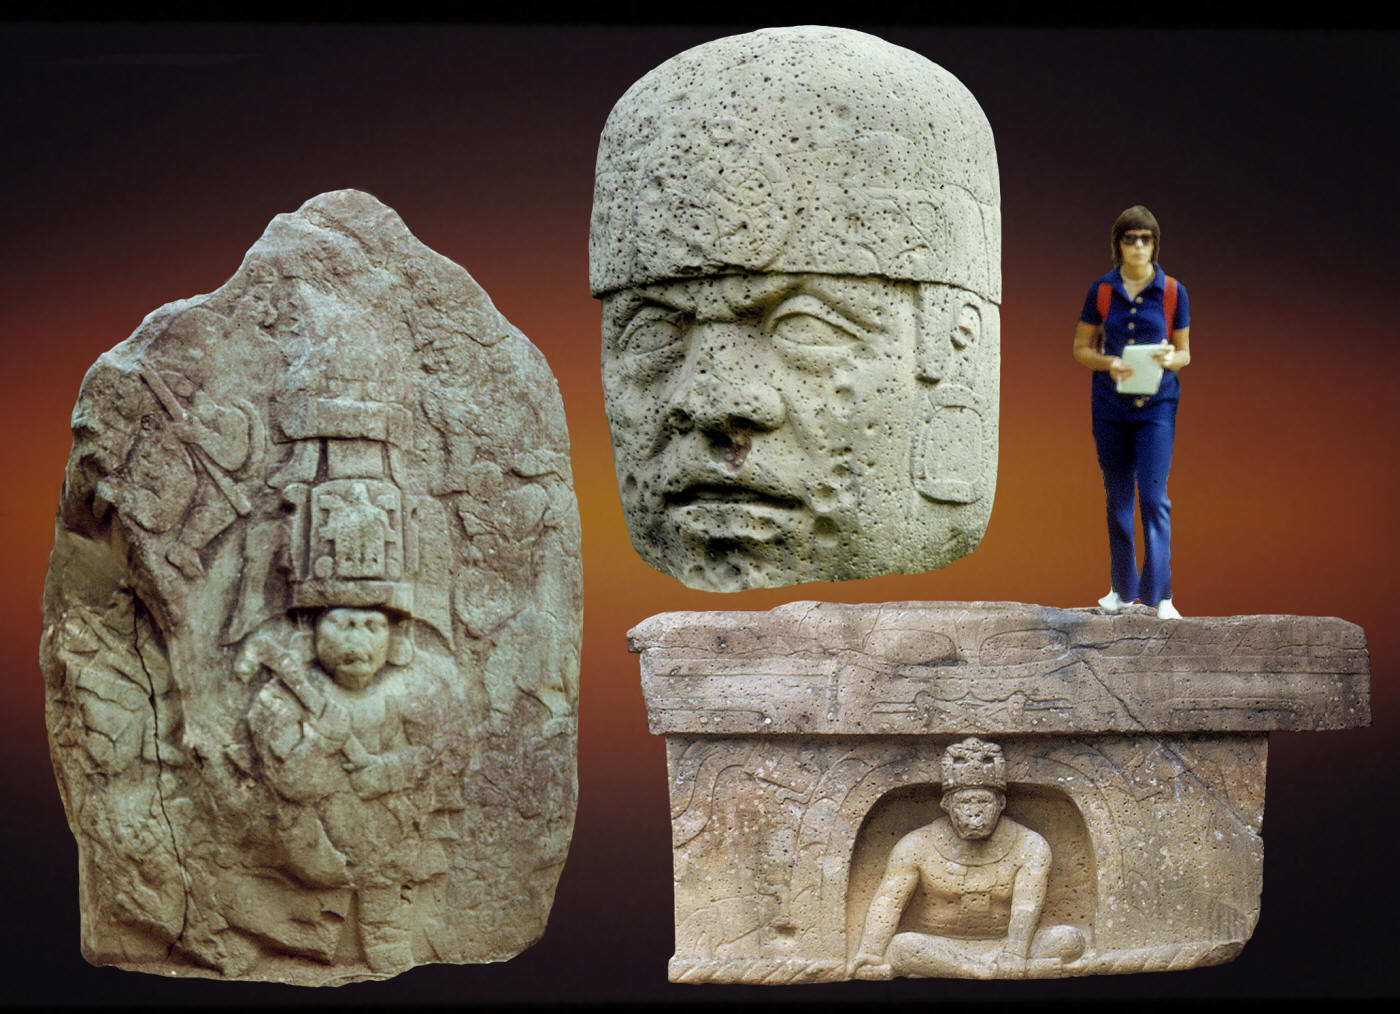 3 monumental stone works, stela, throne and head.